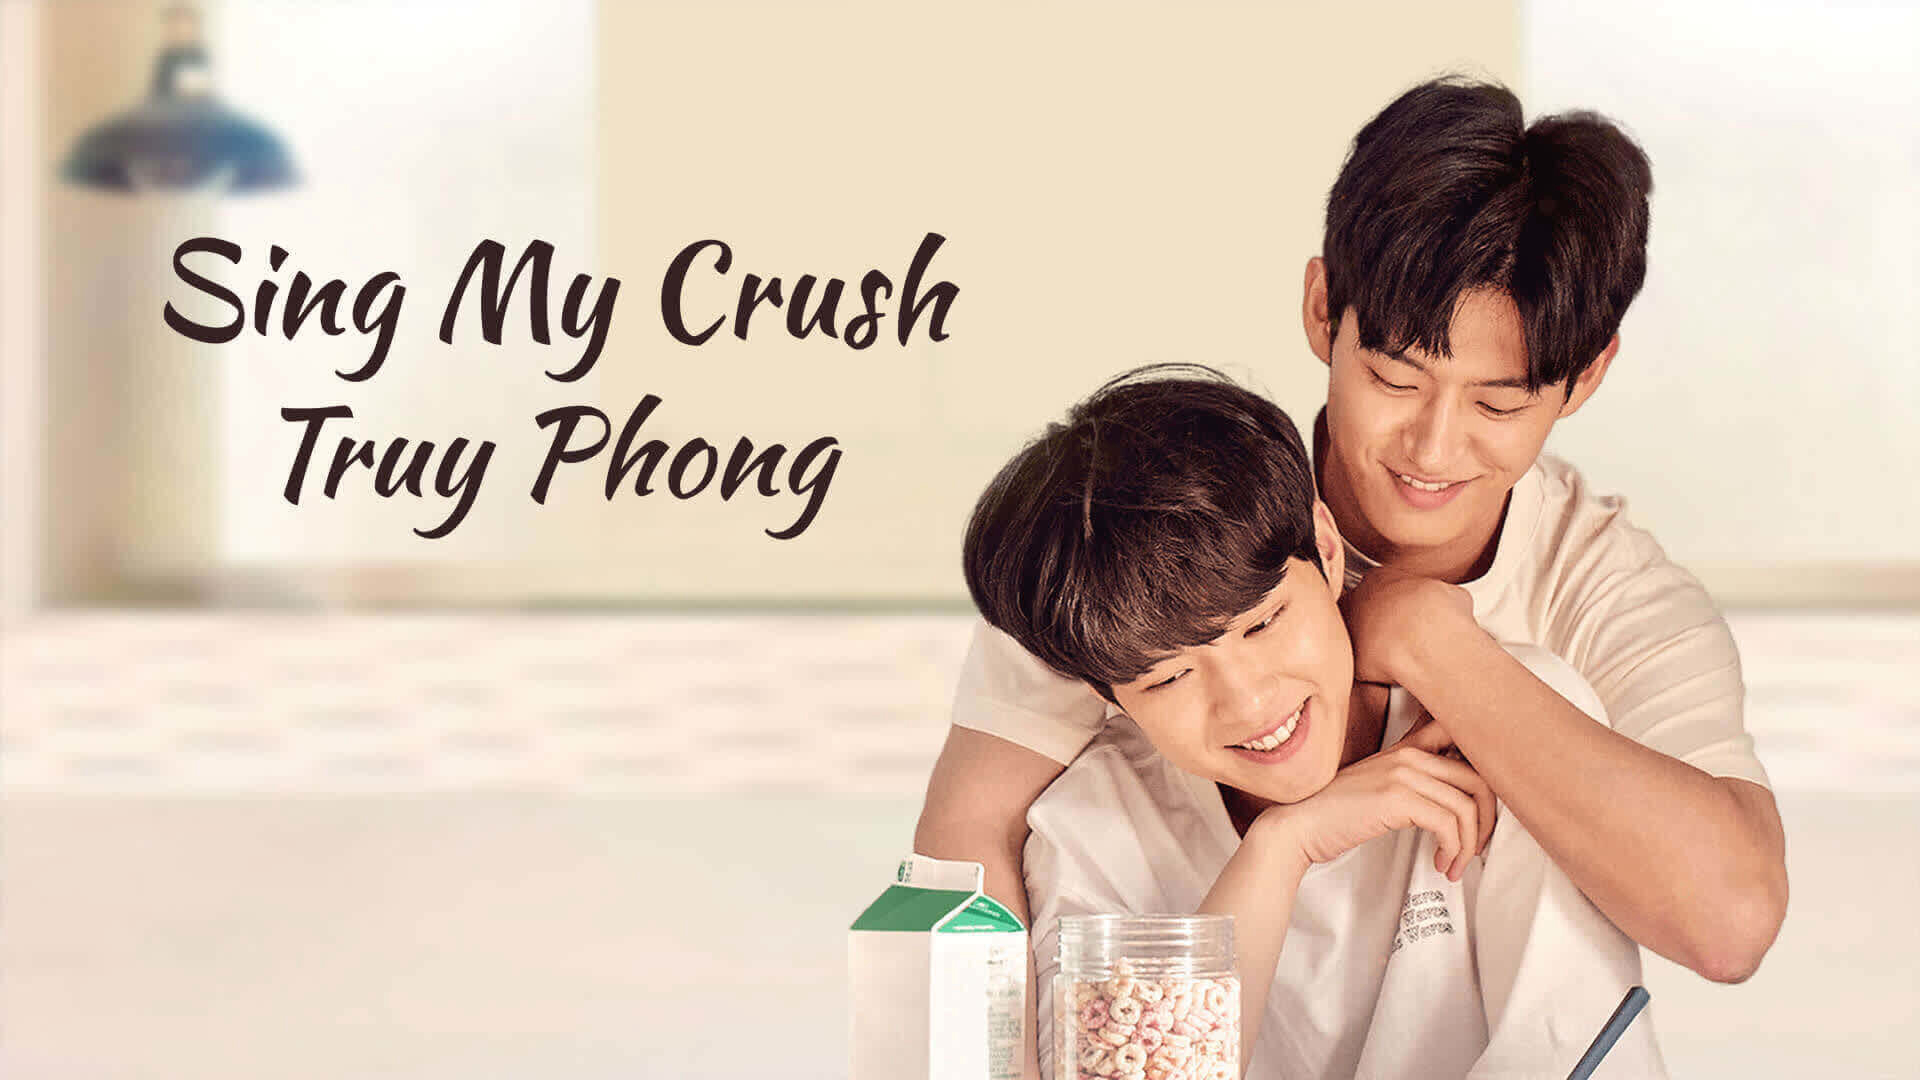 Sing My Crush: Truy Phong Sing My Crush